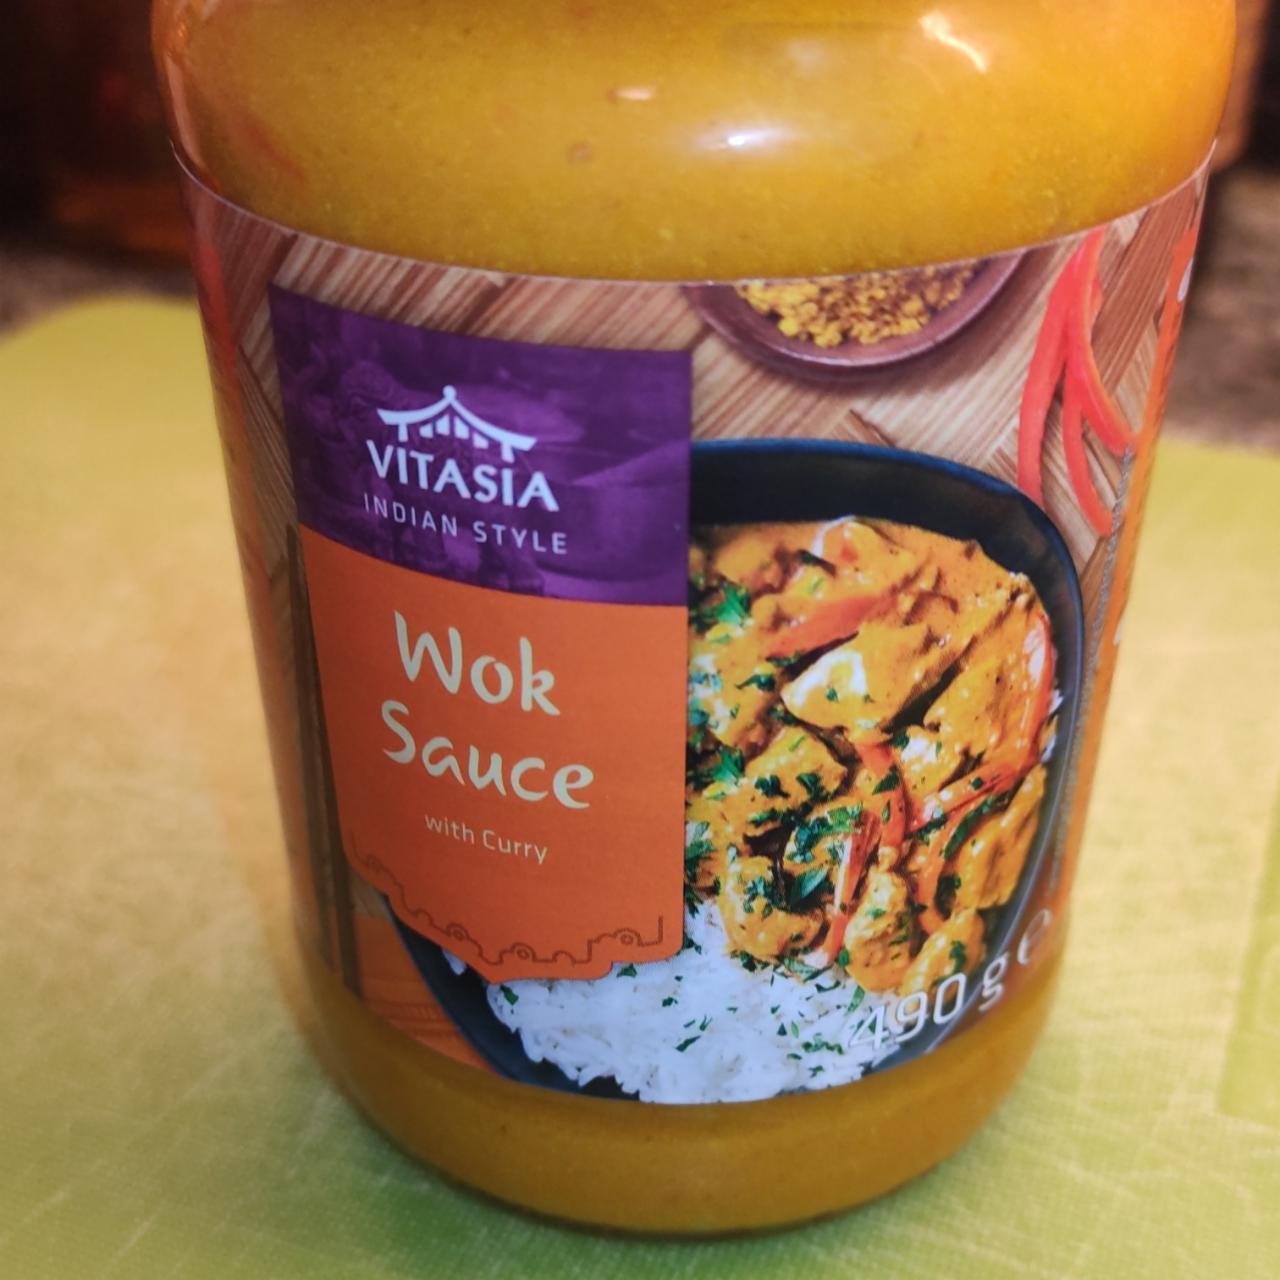 Fotografie - Wok Sauce with Curry Vitasia